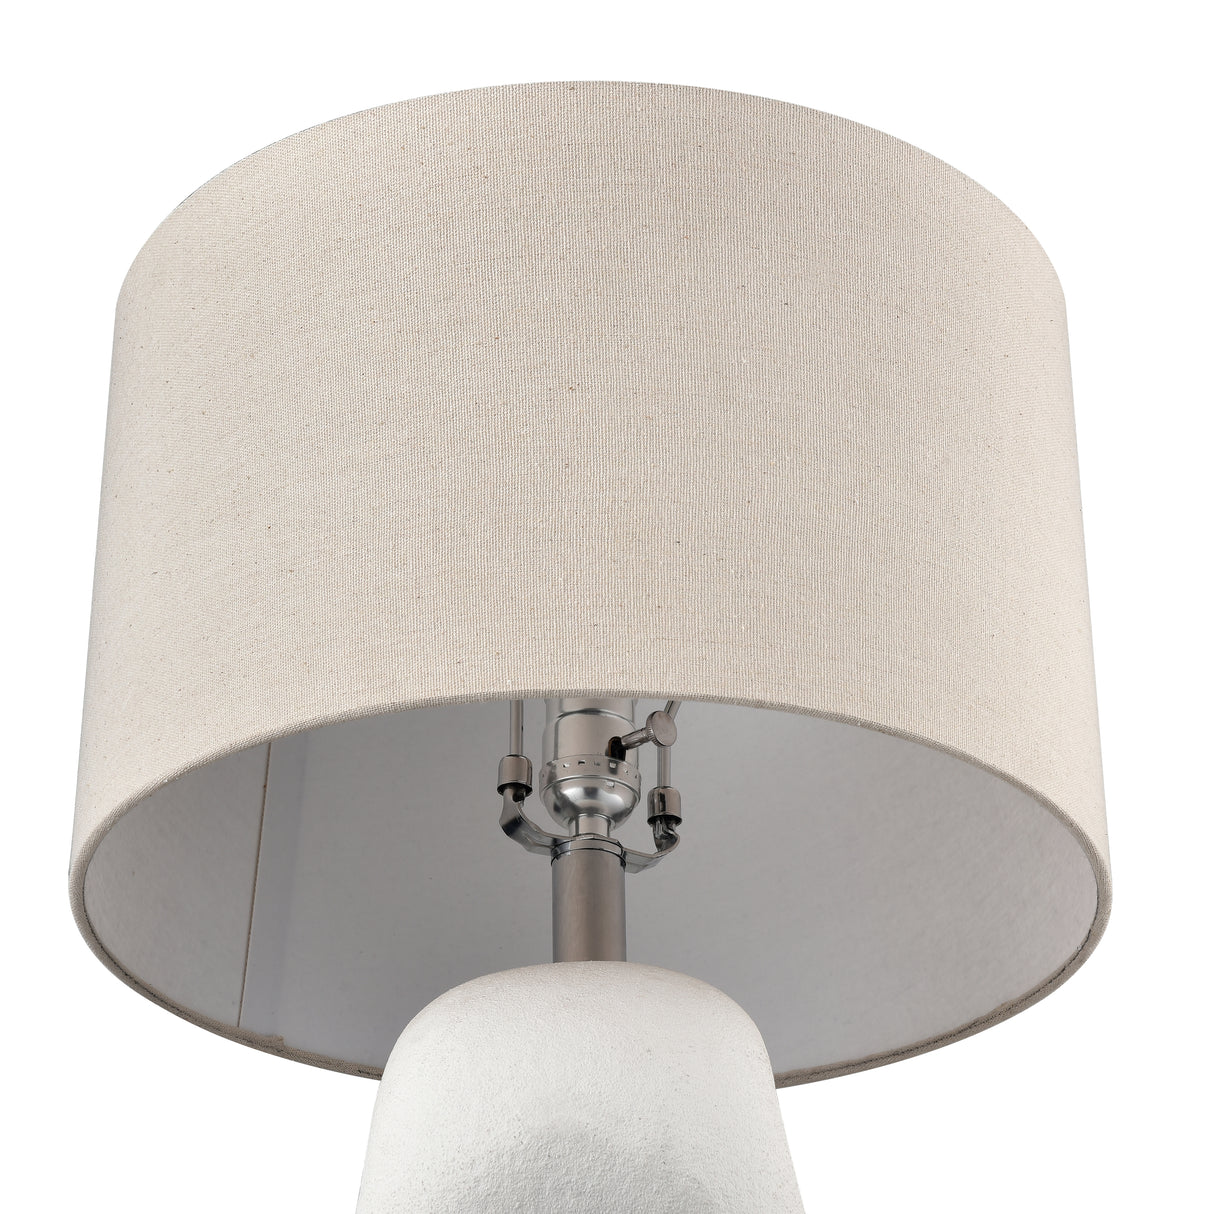 Elk H0019-10374 Colby 22'' High 1-Light Table Lamp